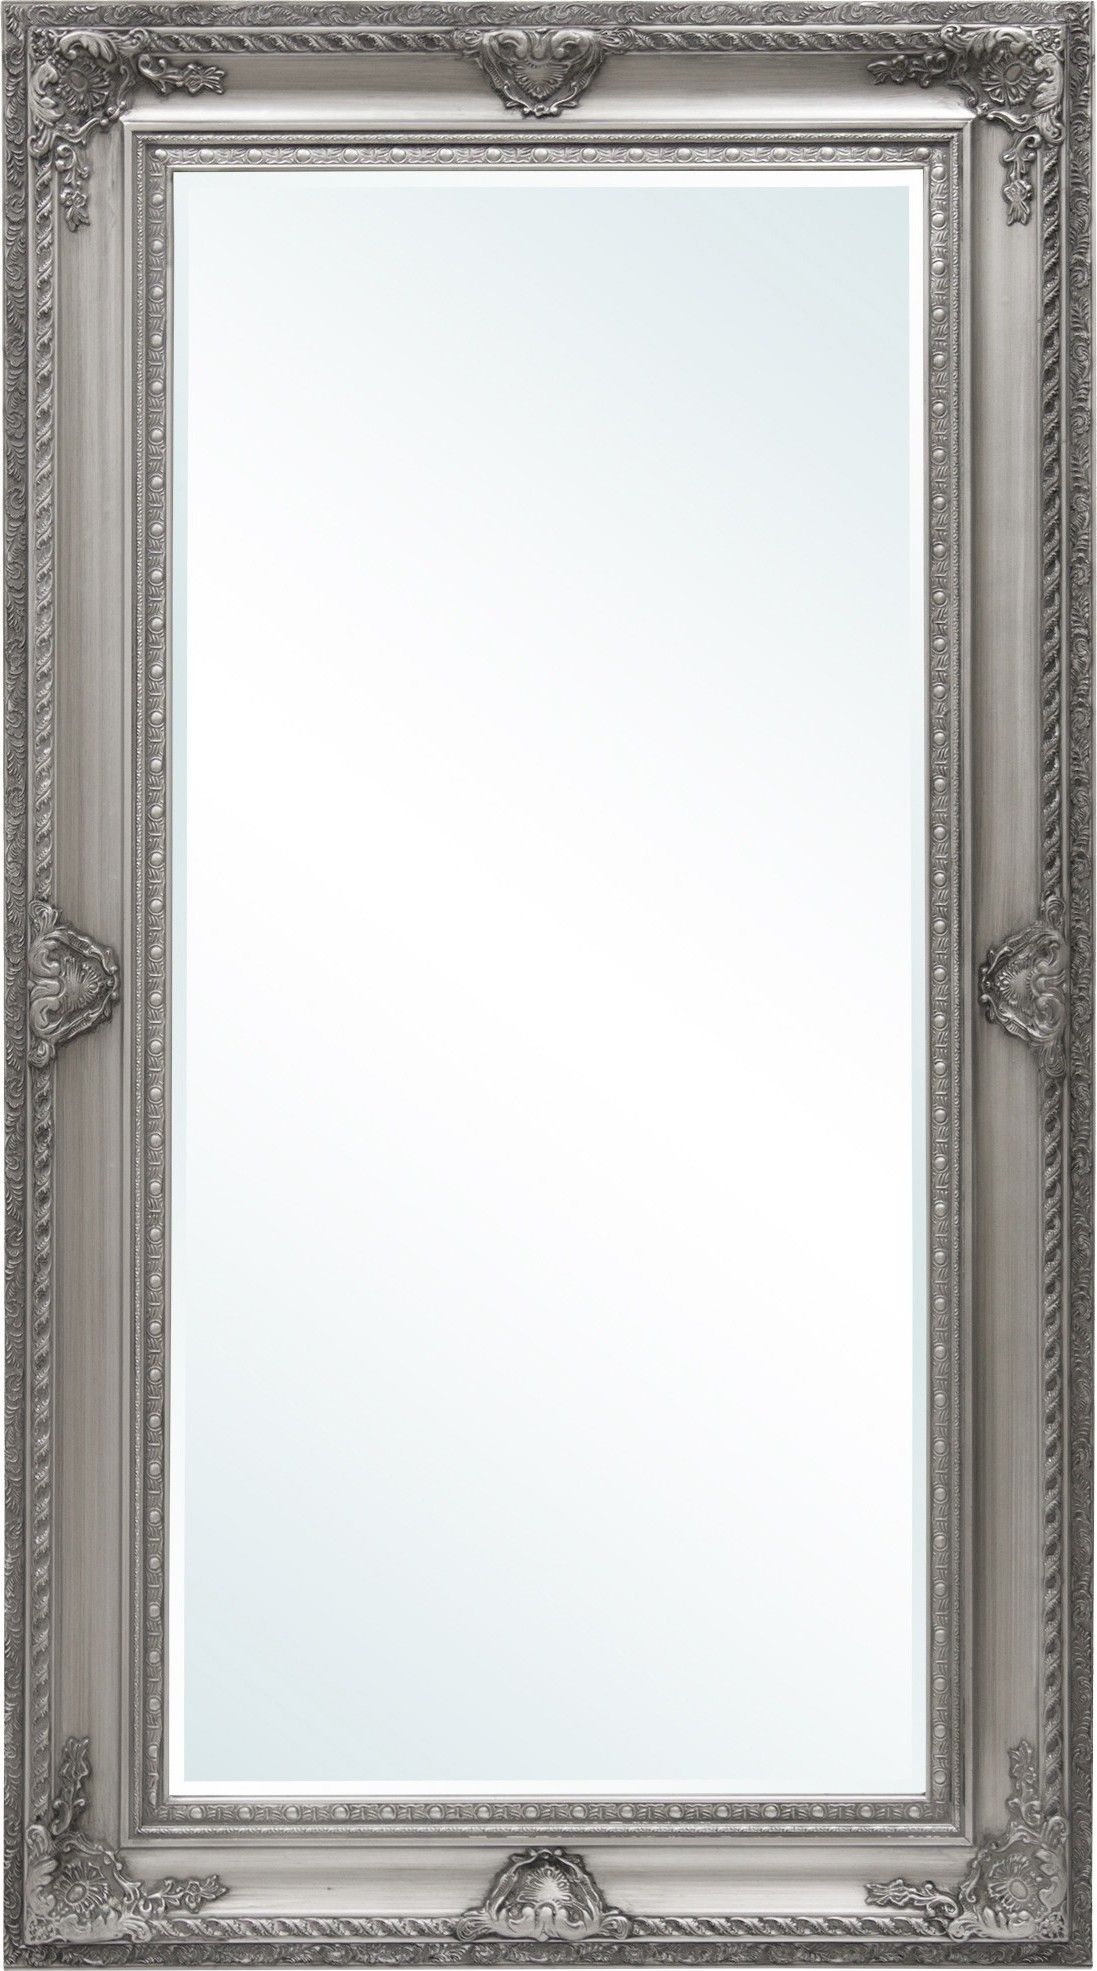 Velké zrcadlo stříbrné 108027 Mdum - M DUM.cz